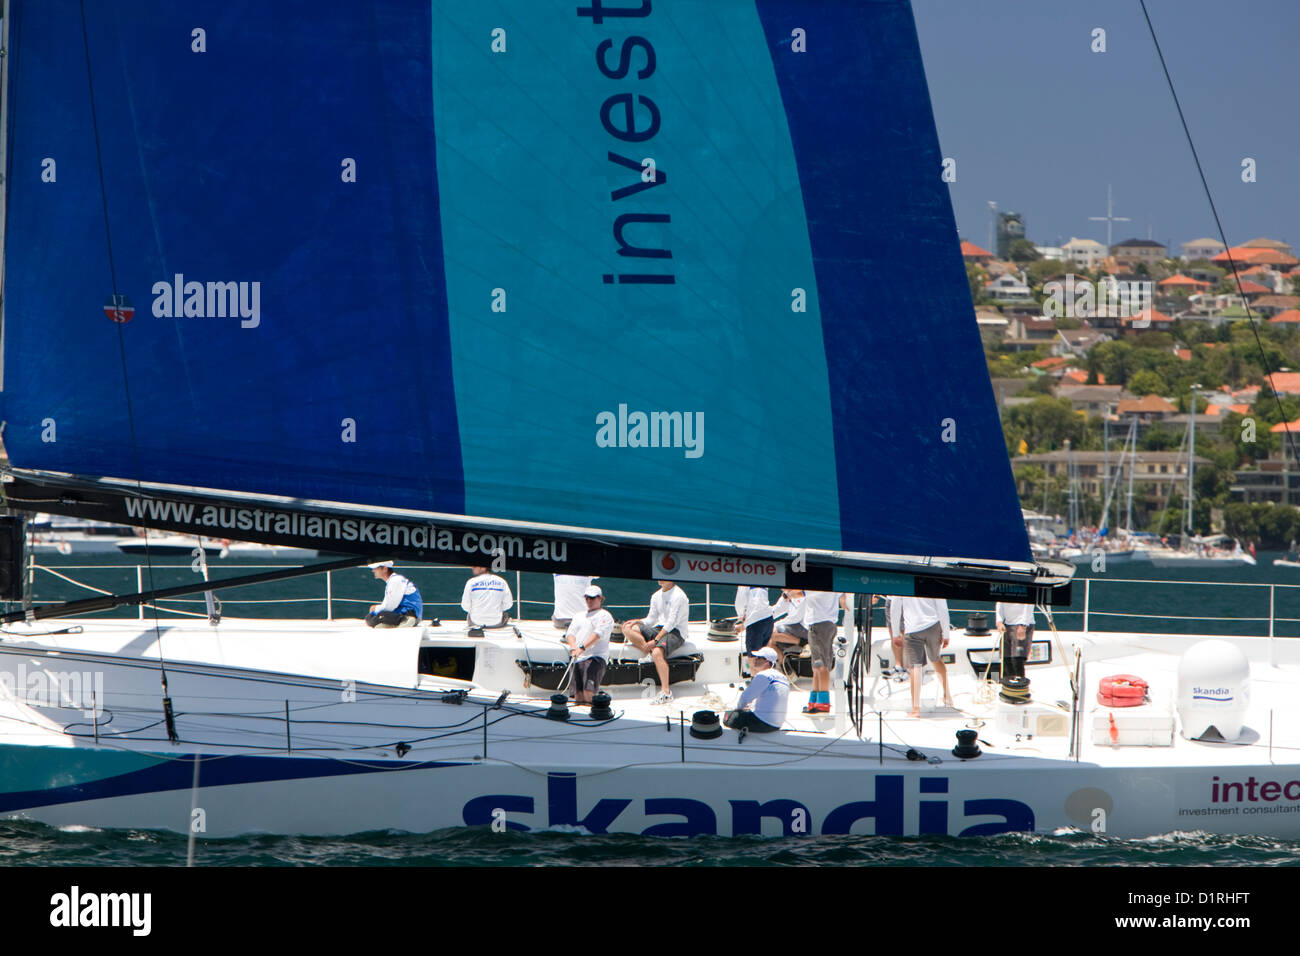 maxiyacht skandia preparing for start of sydney to hobart yacht race Stock Photo